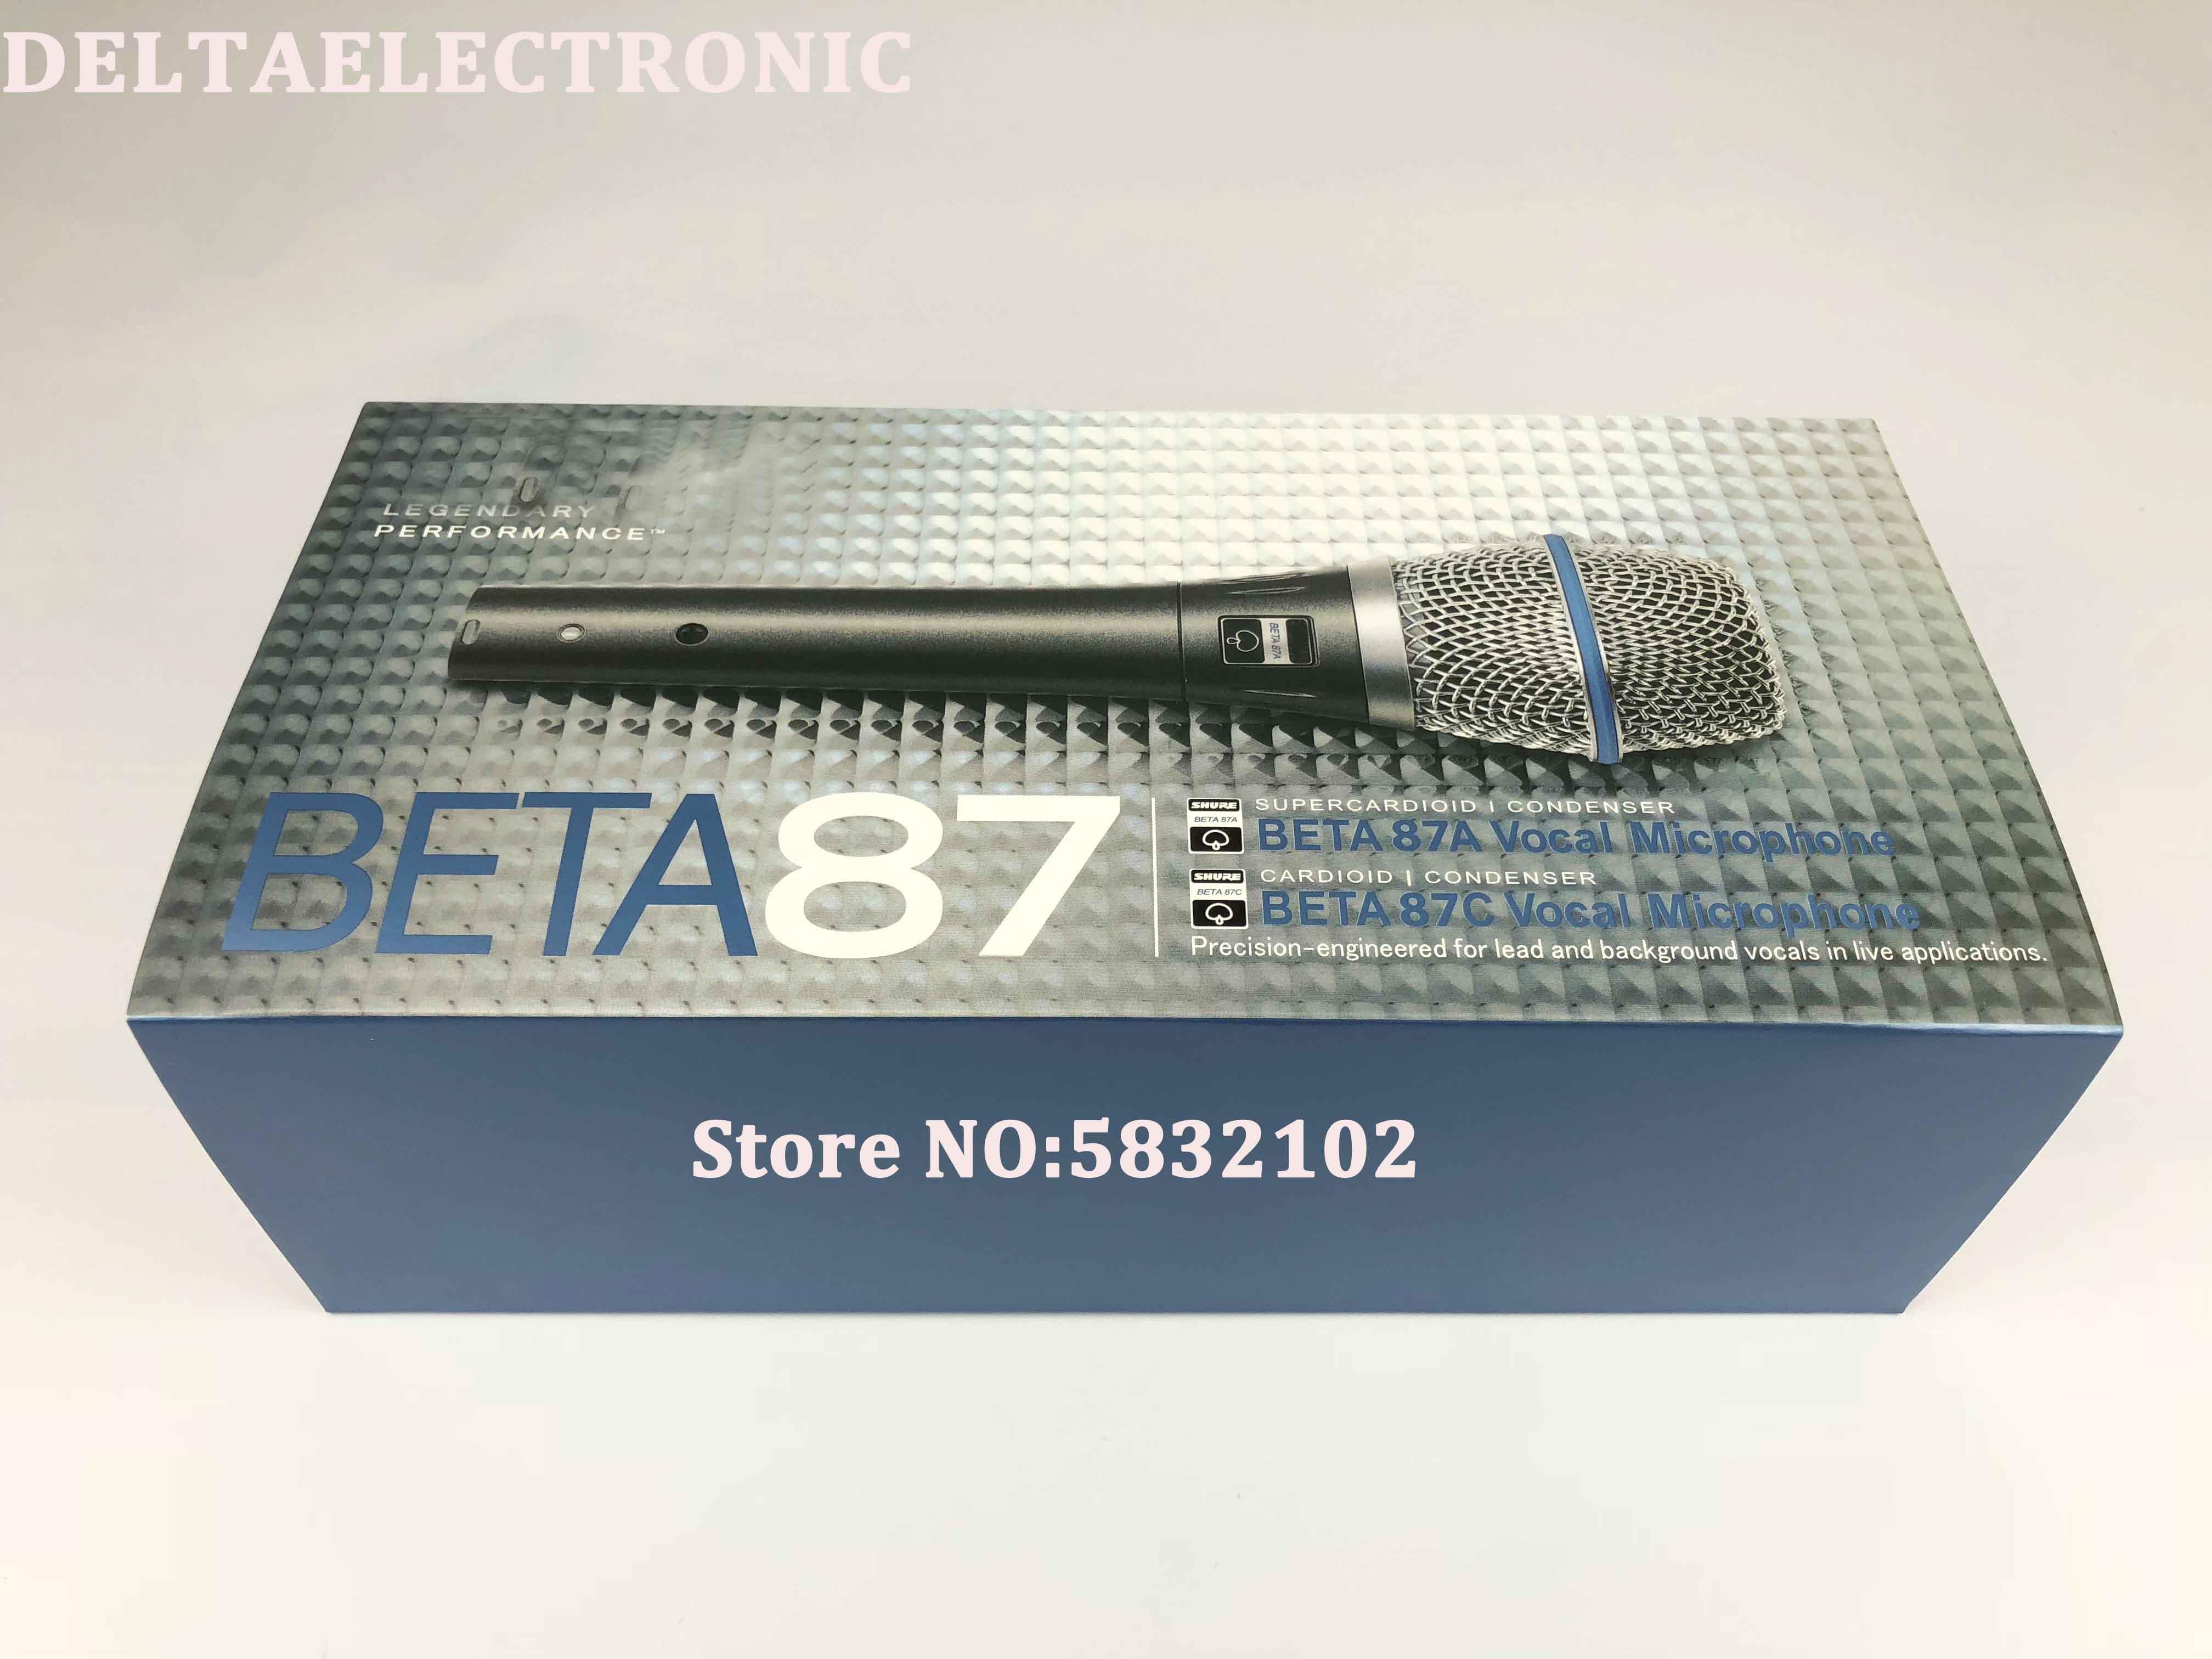 Beta87A,Supercardioid Condensator Microfoon, Helder Geluid Bedraad Vocale Microfono, Microfoon